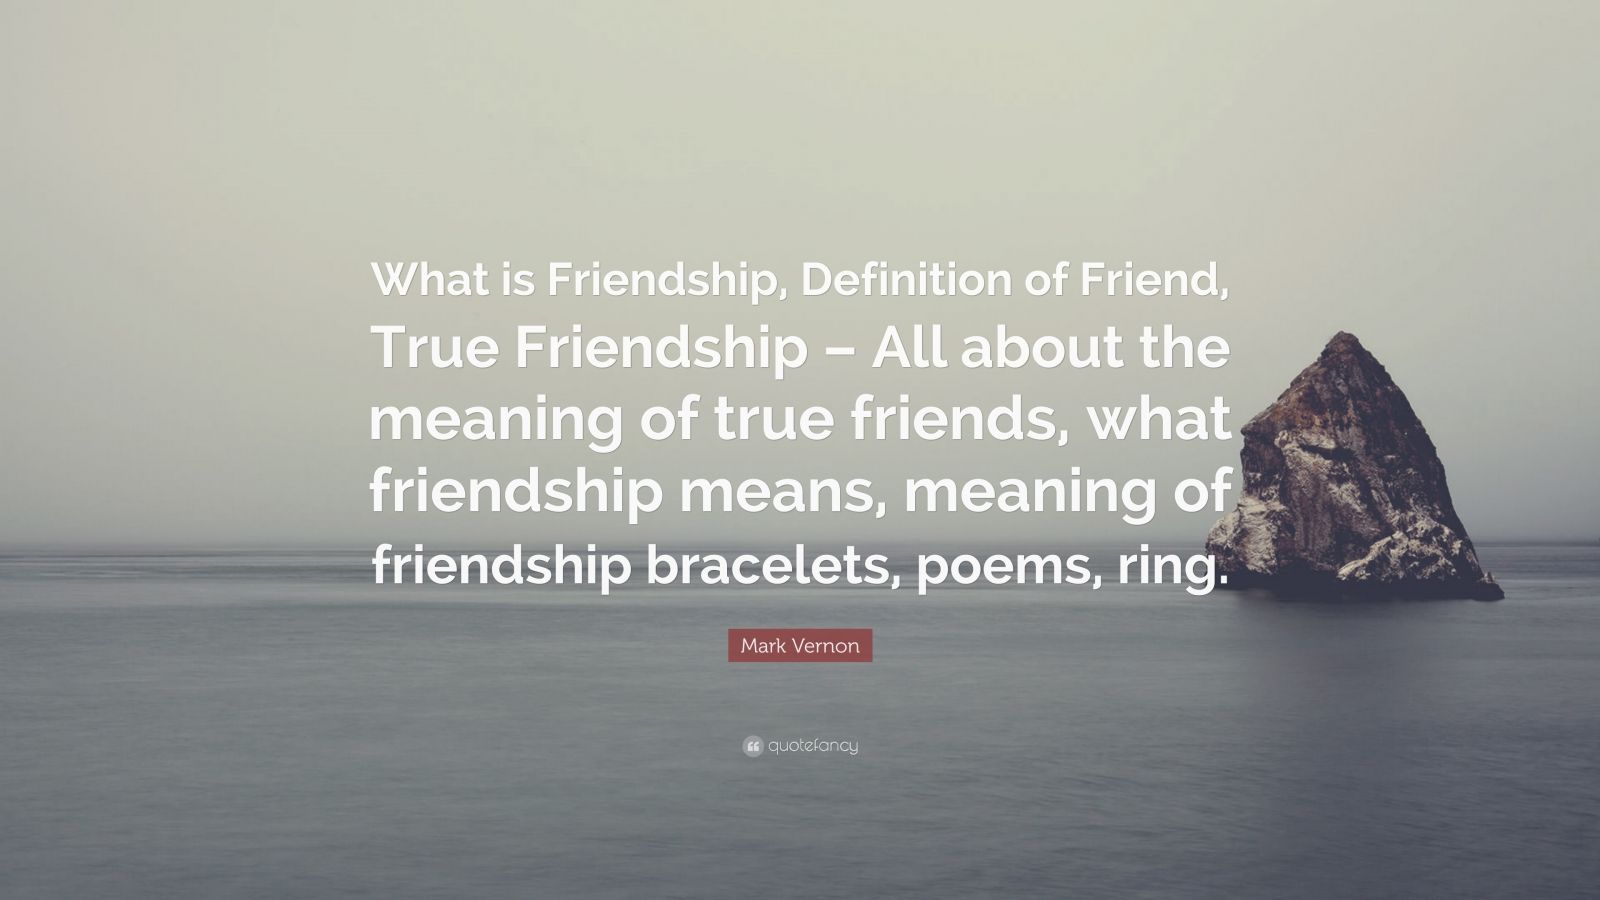 Mark Vernon Quote: “What is Friendship, Definition of Friend, True